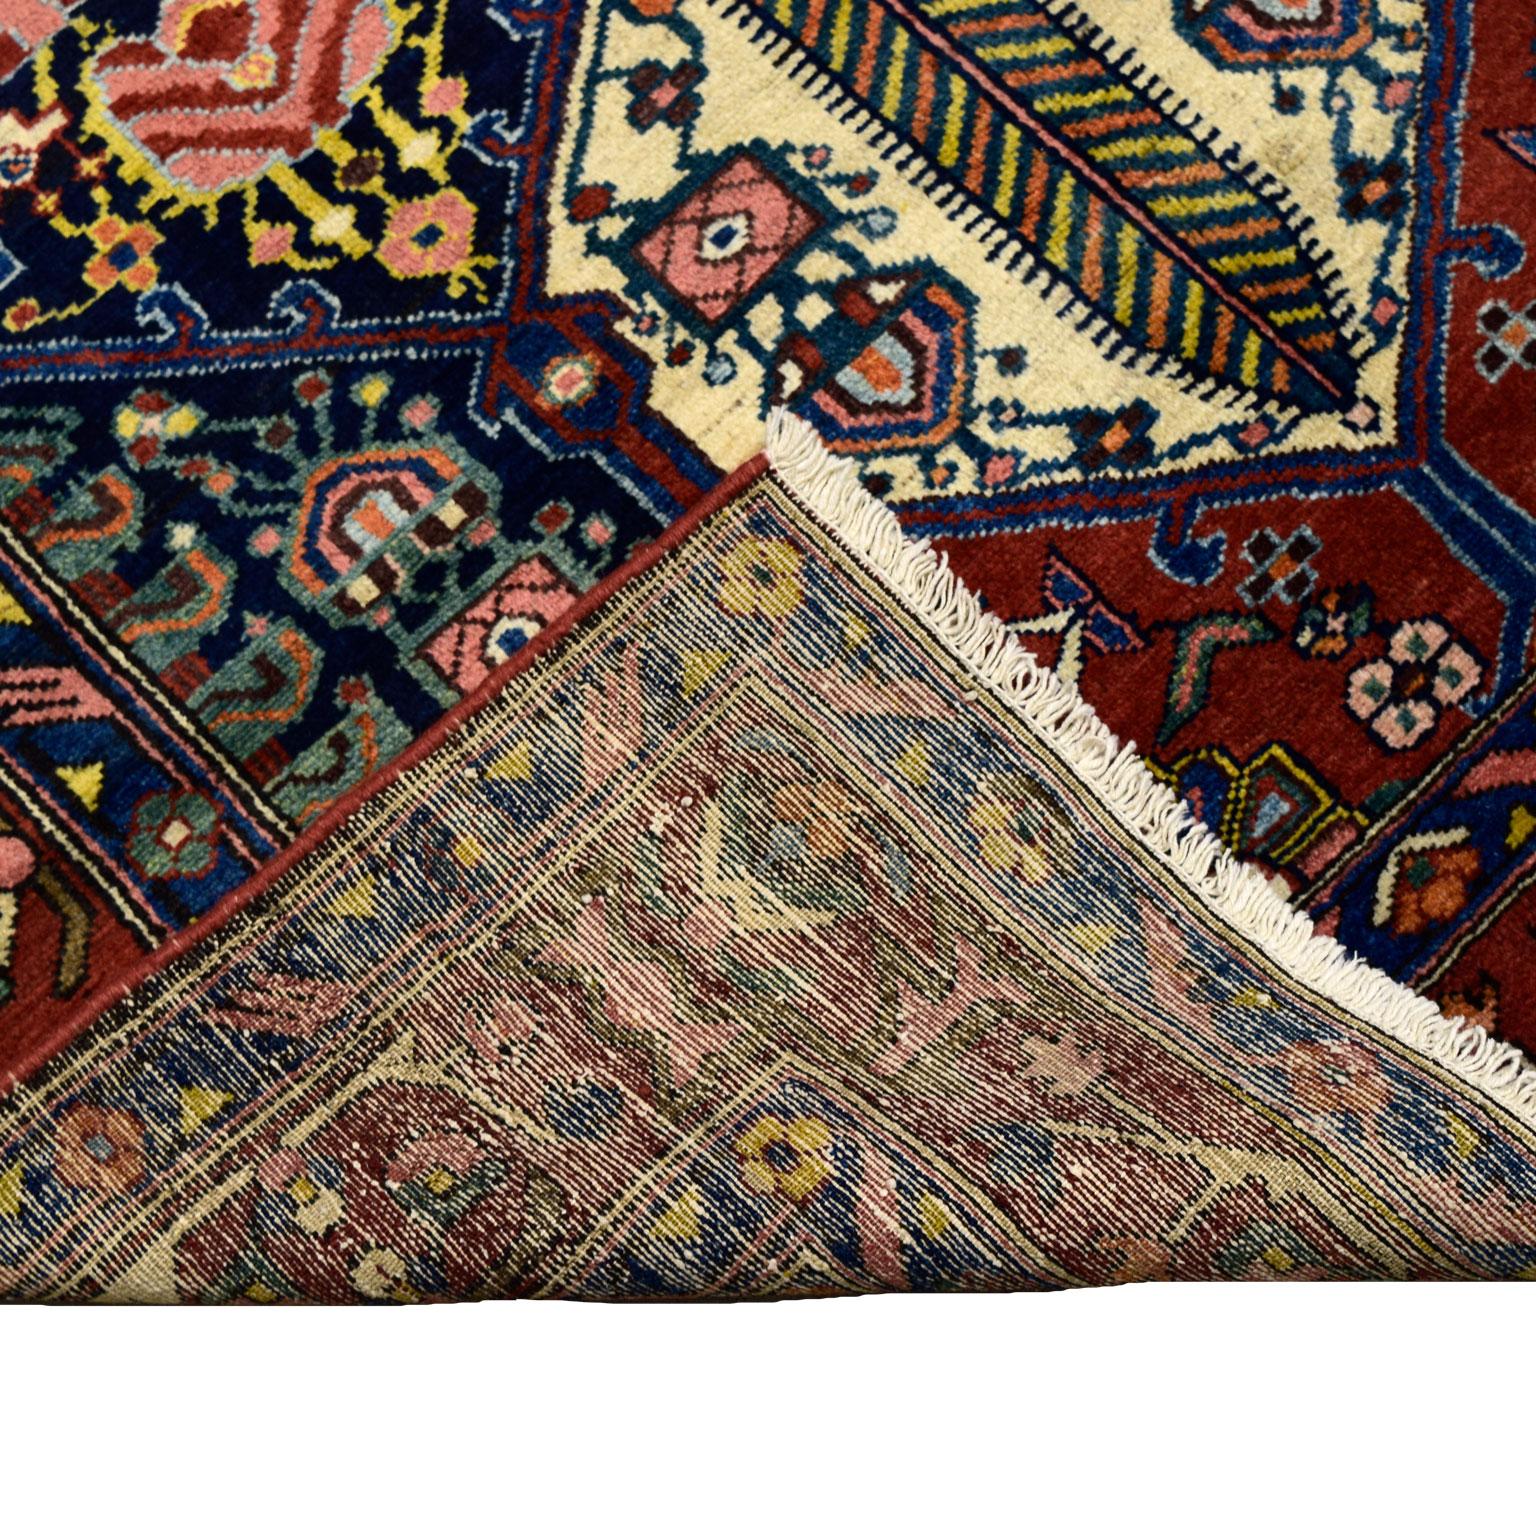 Antique 1920s Wool Persian Bakhtiari Rug, Classic Lozenge Design, 5' x 7' For Sale 2